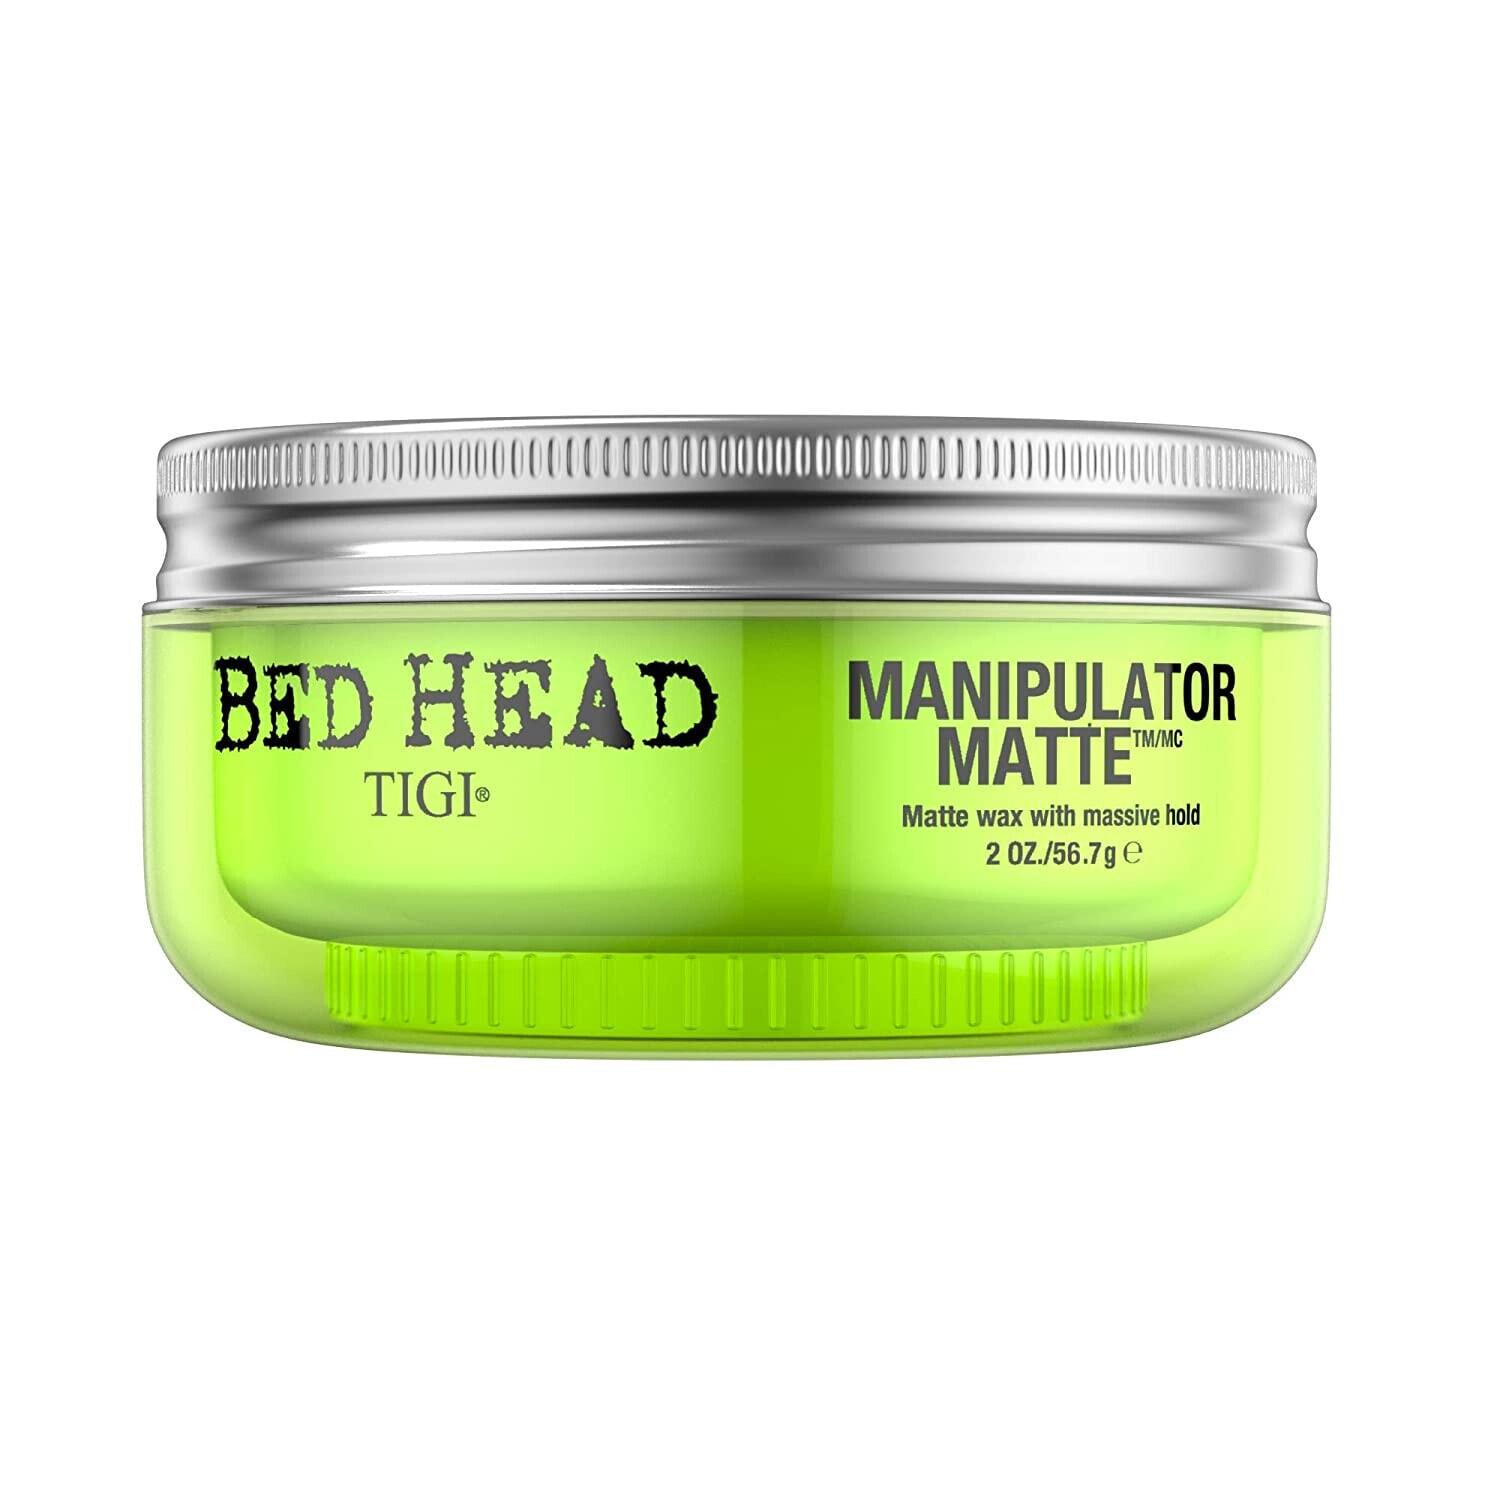 TIGI Manipulator Matte Hair Wax for Strong Hold 2oz